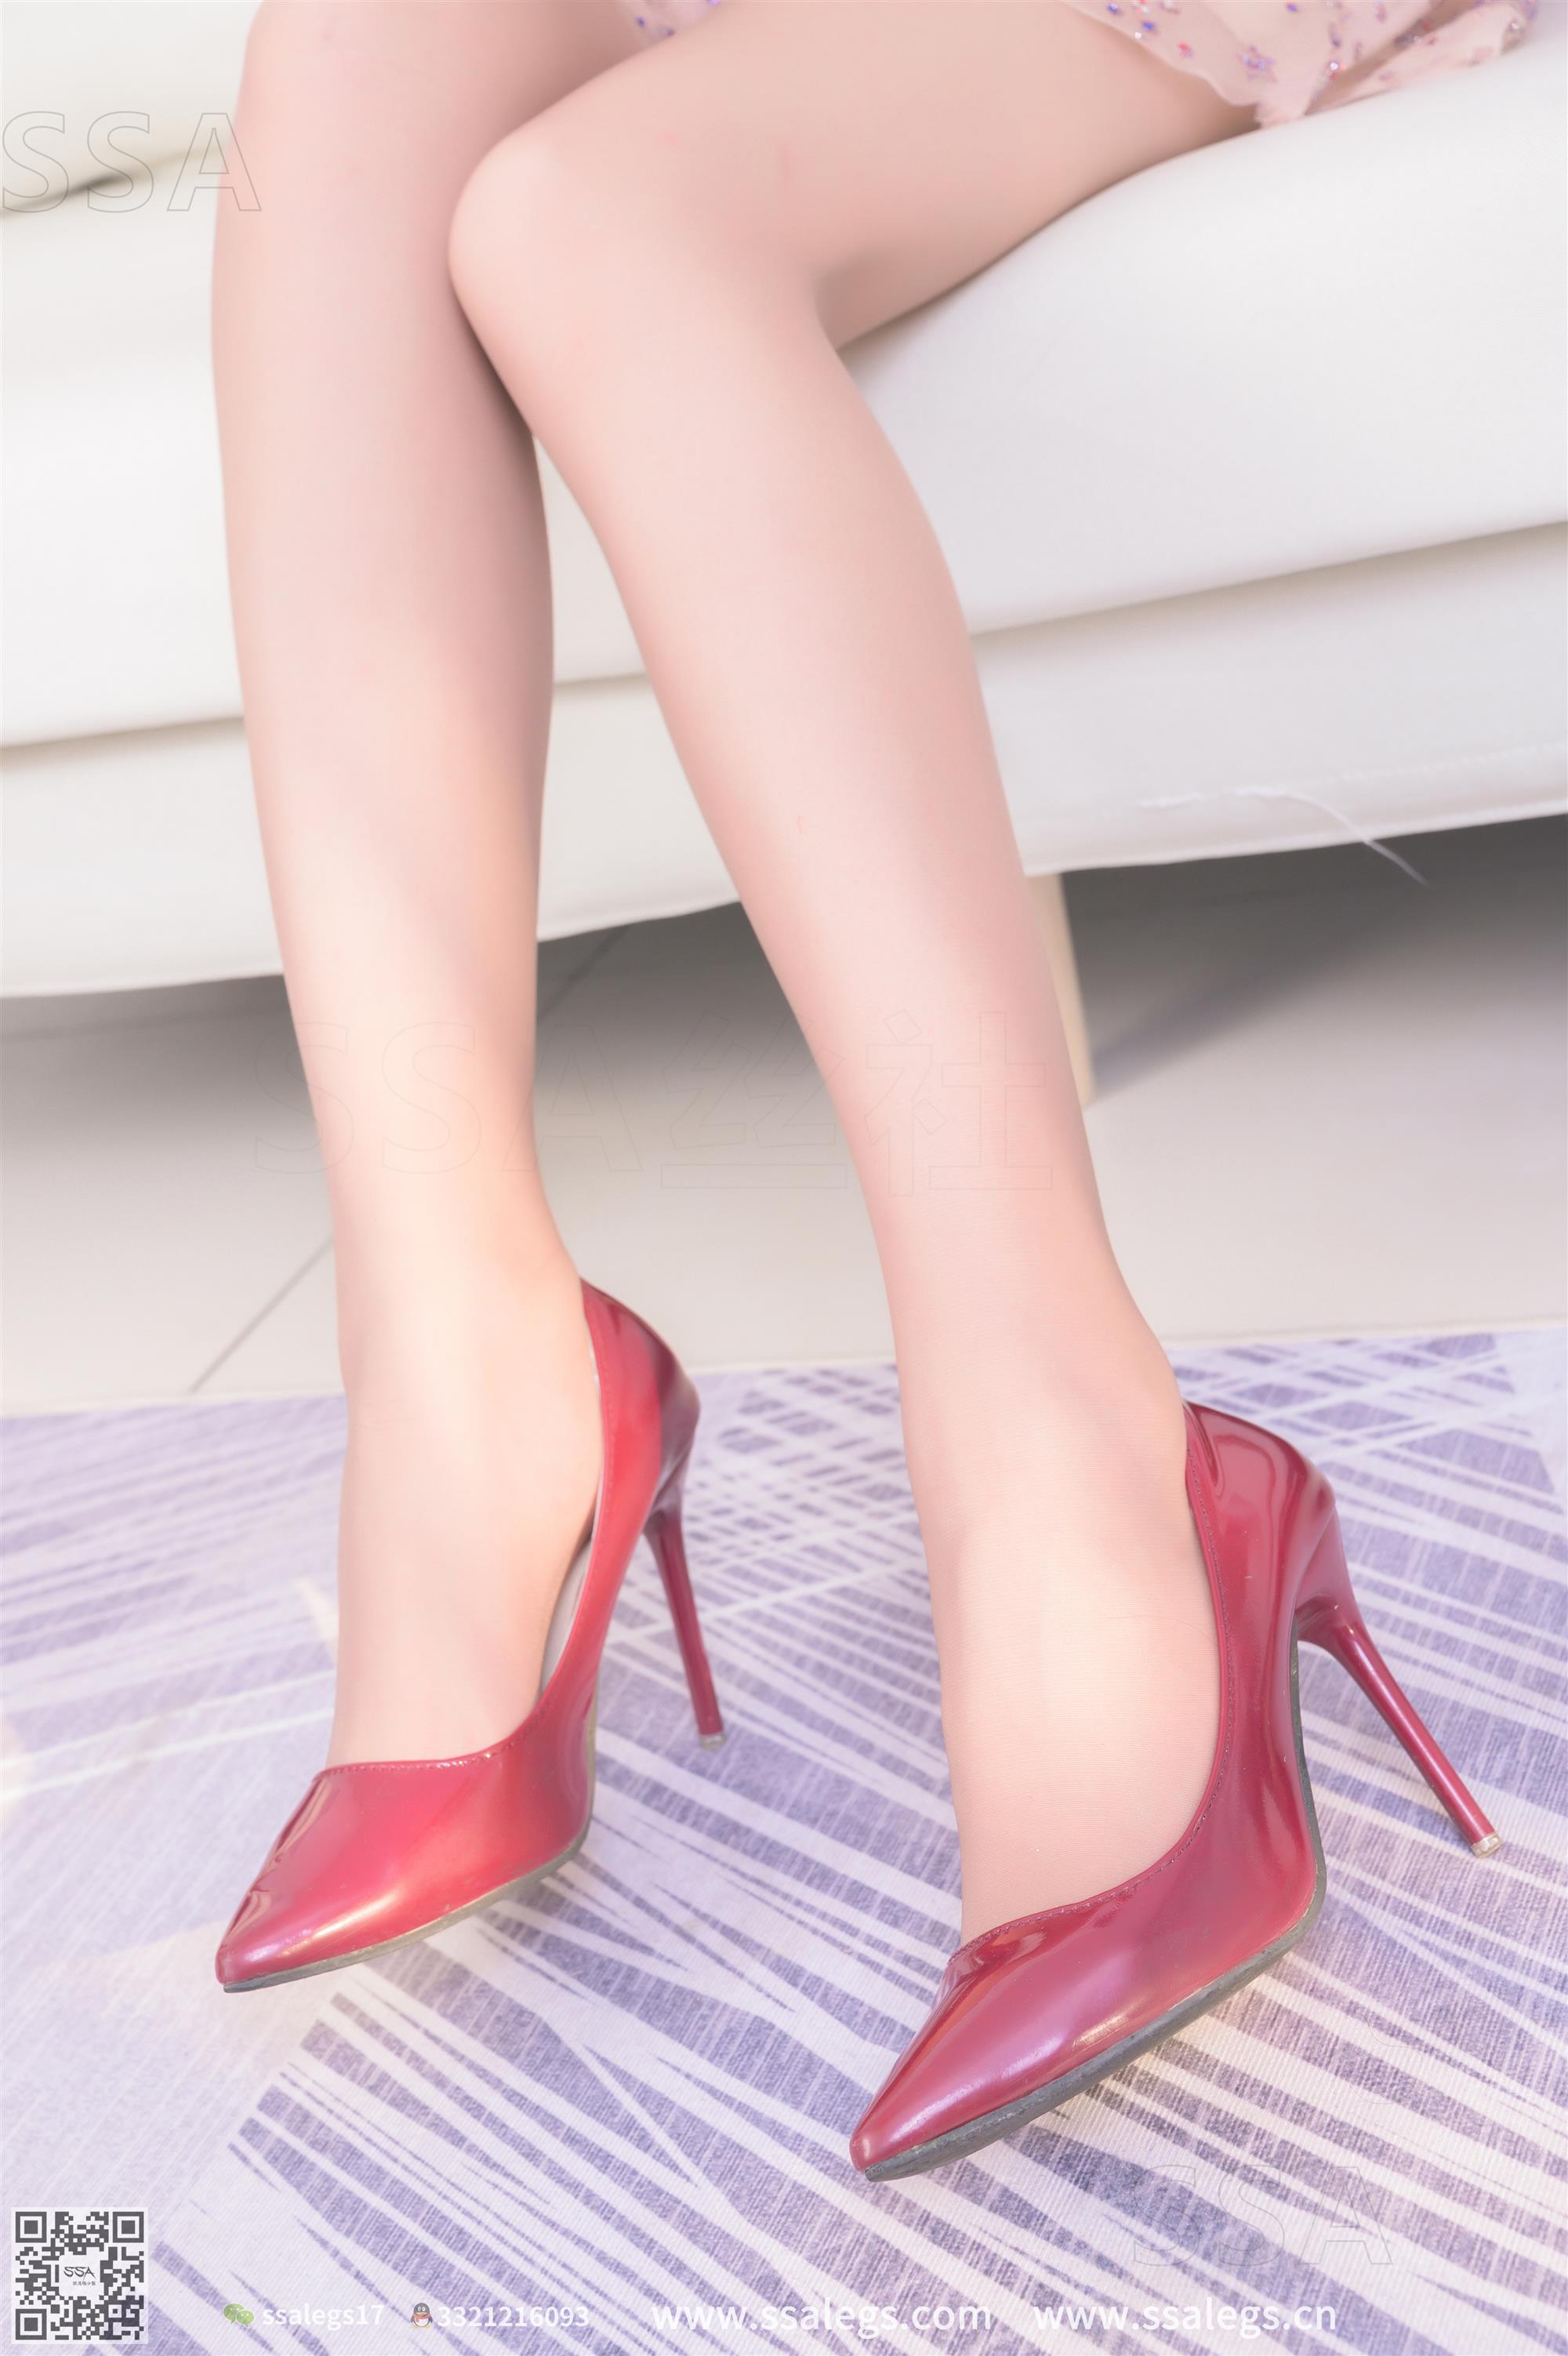 SSA 丝社 No.312 娜娜御姐的红色高跟鞋咖啡丝美腿 - 26.jpg